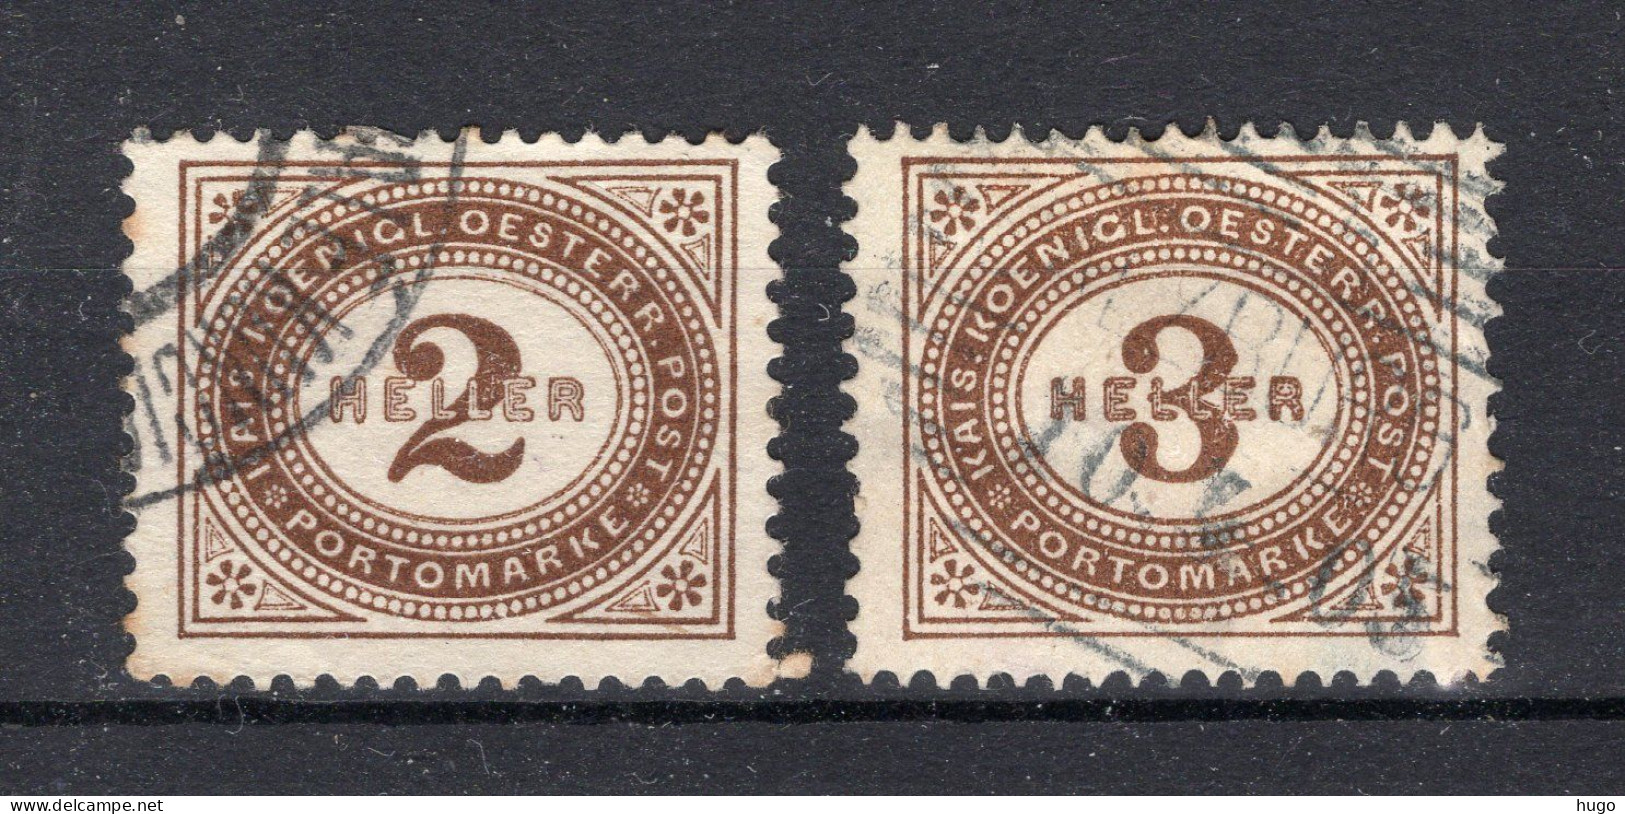 OOSTENRIJK Yt. T23/24° Gestempeld Portzegels 1900 - Taxe